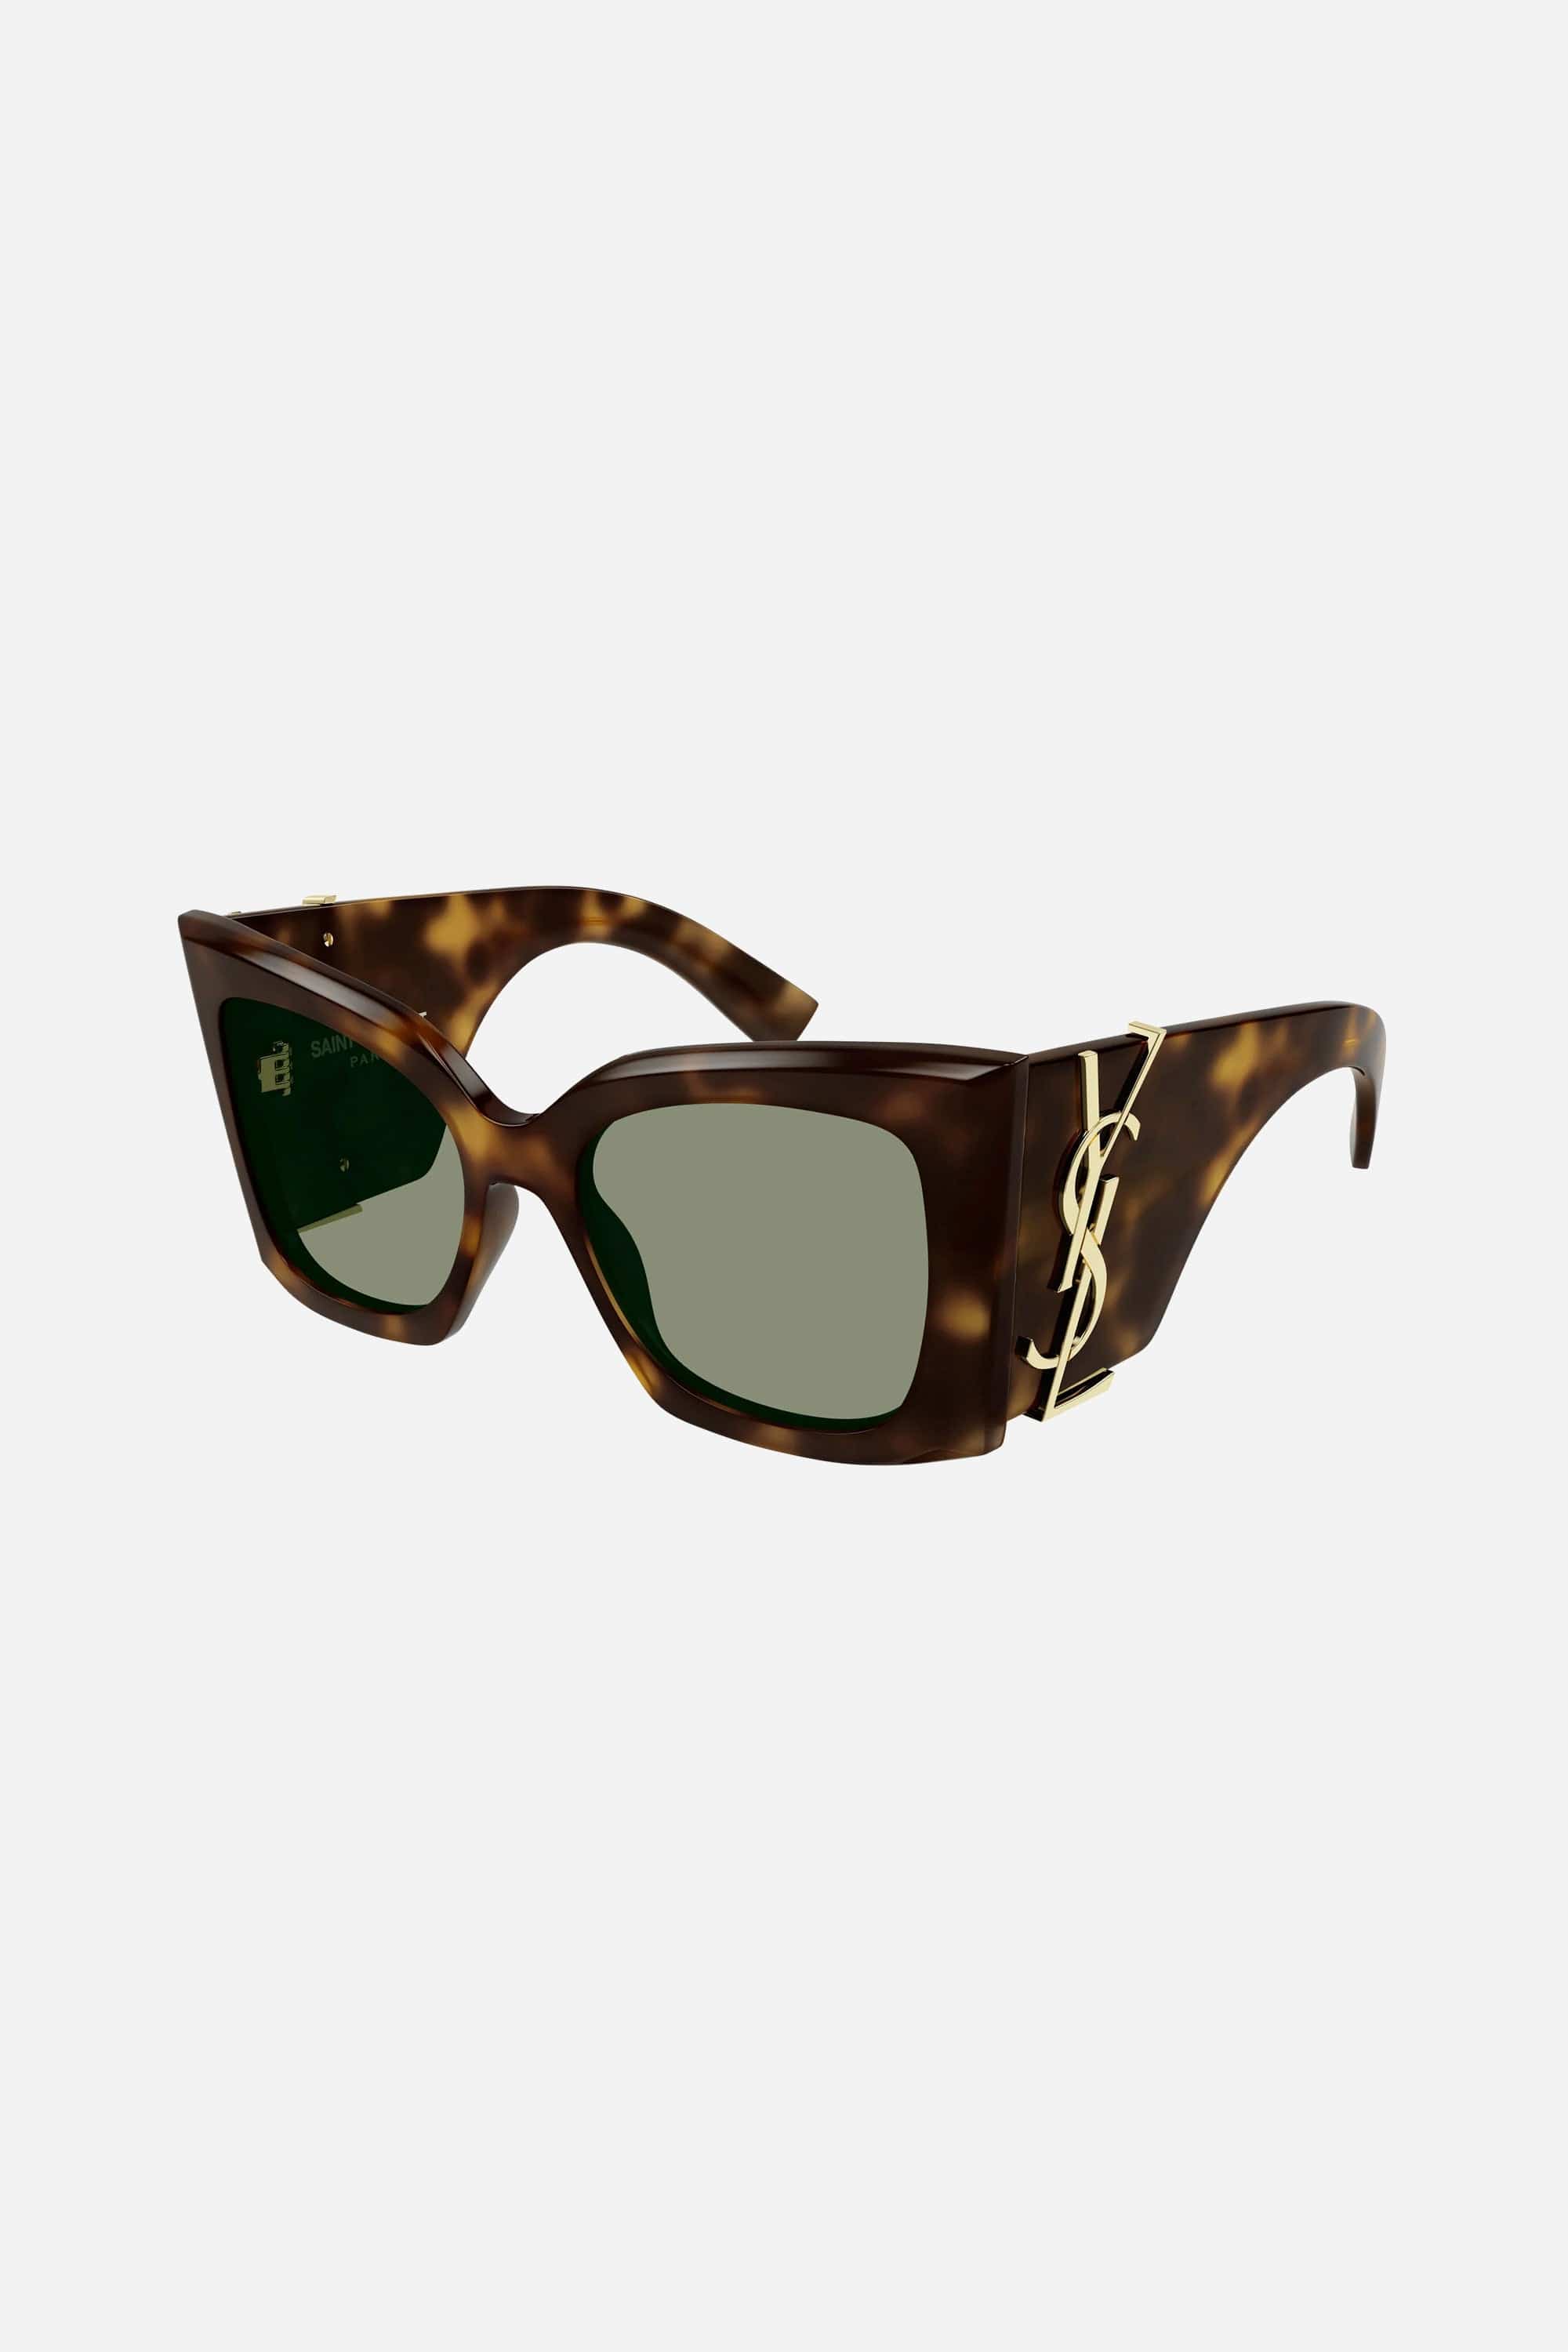 Saint Laurent Blaze SL M119 cat-eye havana sunglasses - Eyewear Club